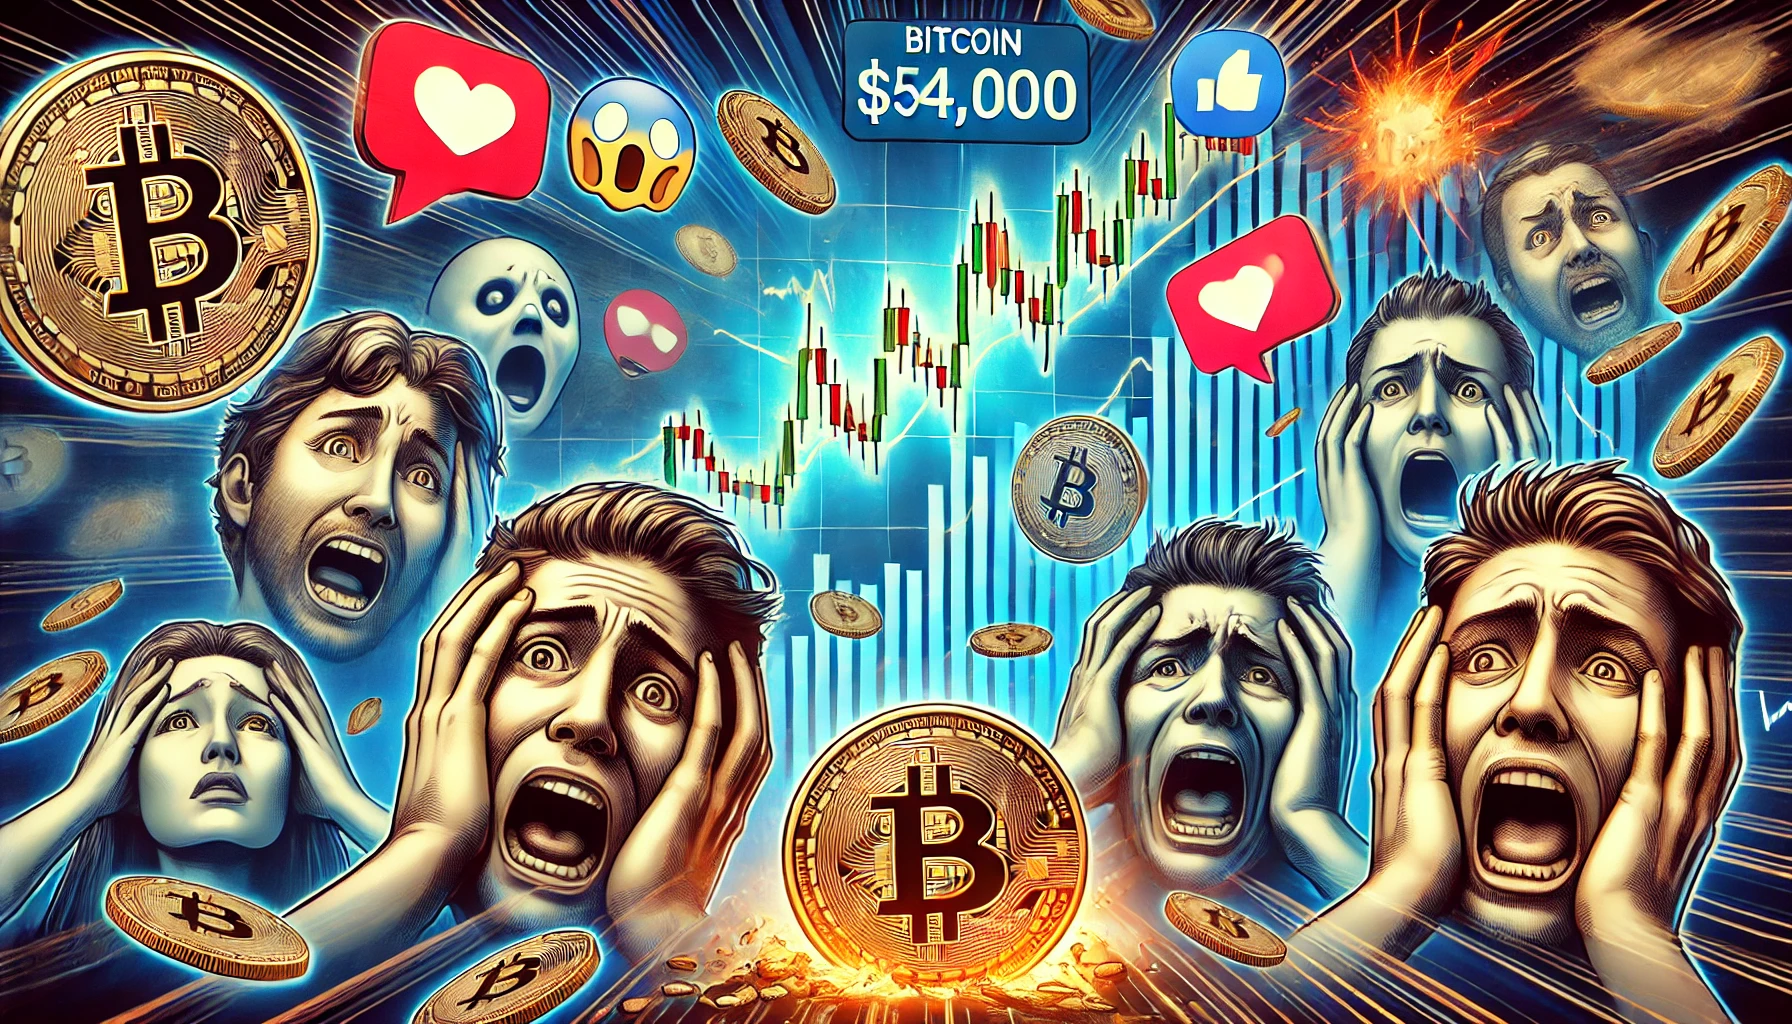 Social Media Screams “Sell” As Bitcoin Crashes To $54,000: Buy Signal?